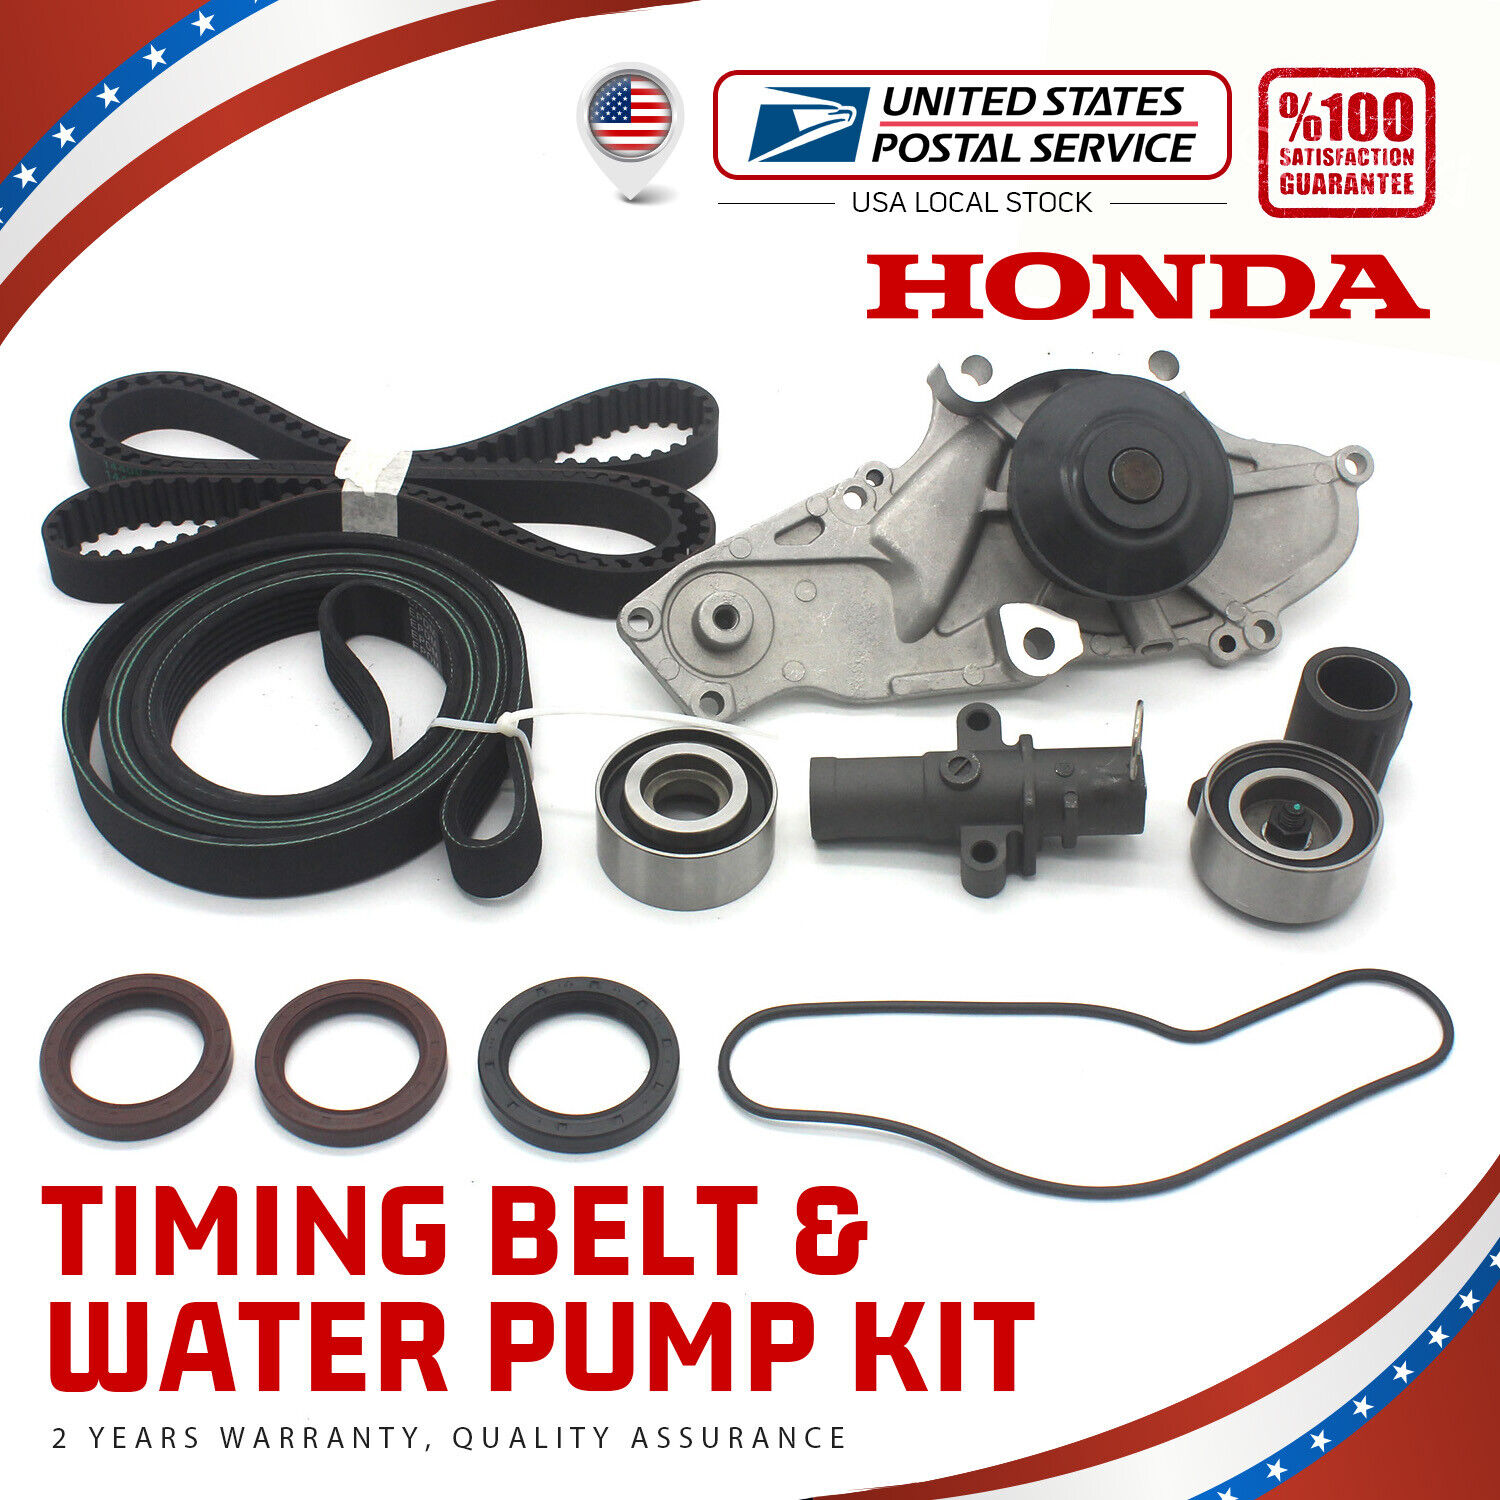 Genuine Timing Belt & Water Pump Kit For Honda Acura V6 Accord Odyssey NEW